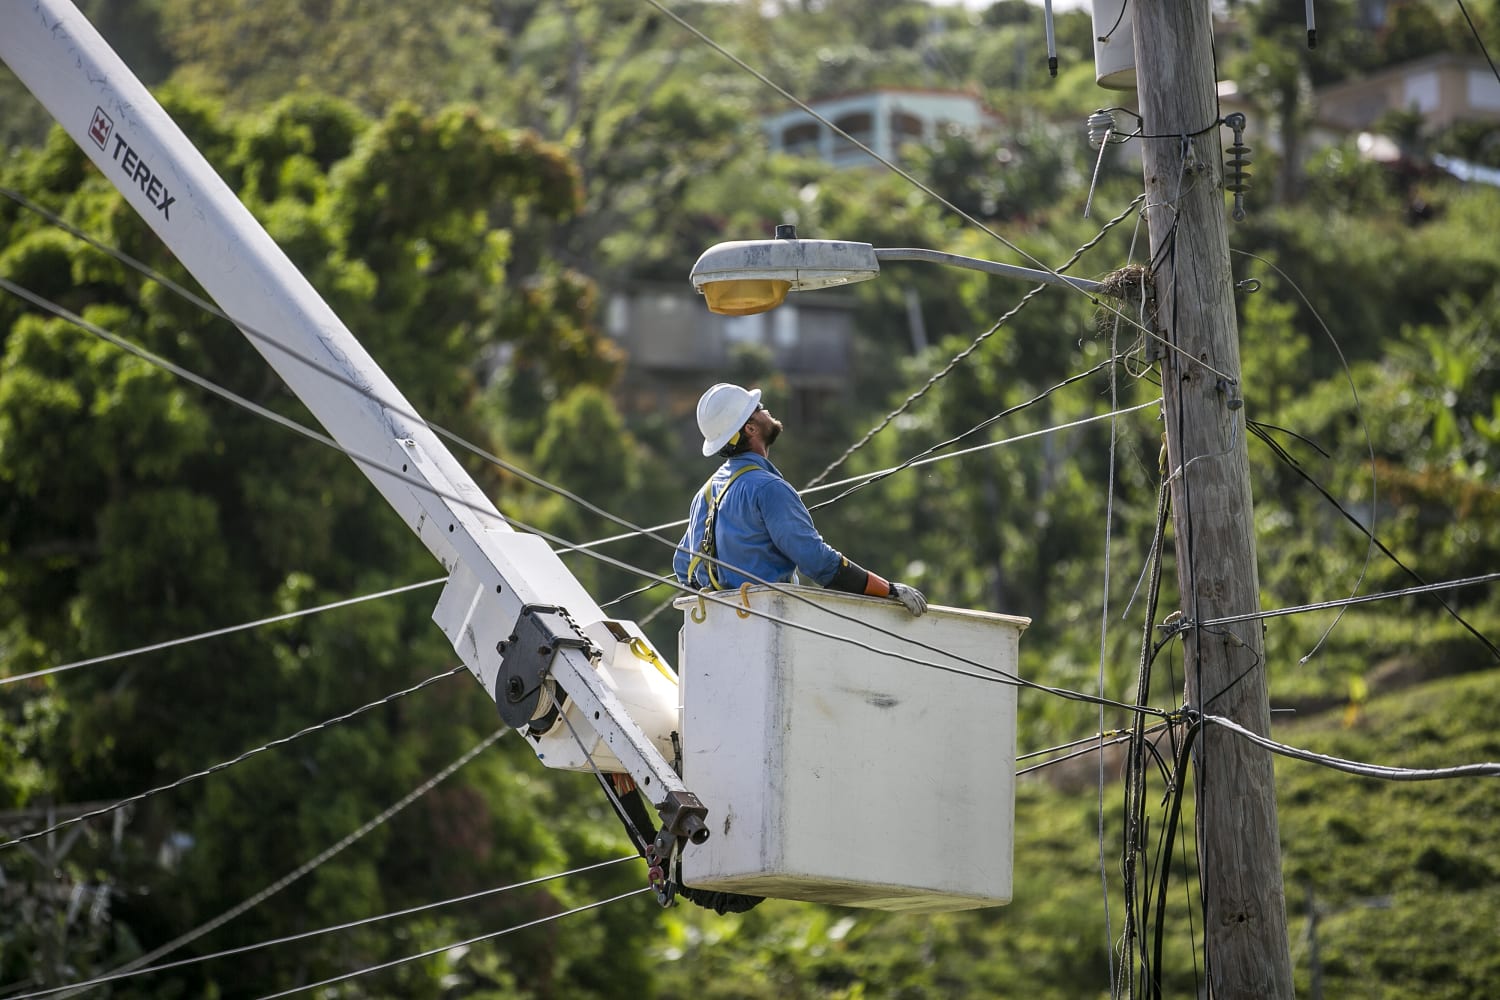 Mejorar sexual Oblea In Puerto Rico, private company takes over power utility service